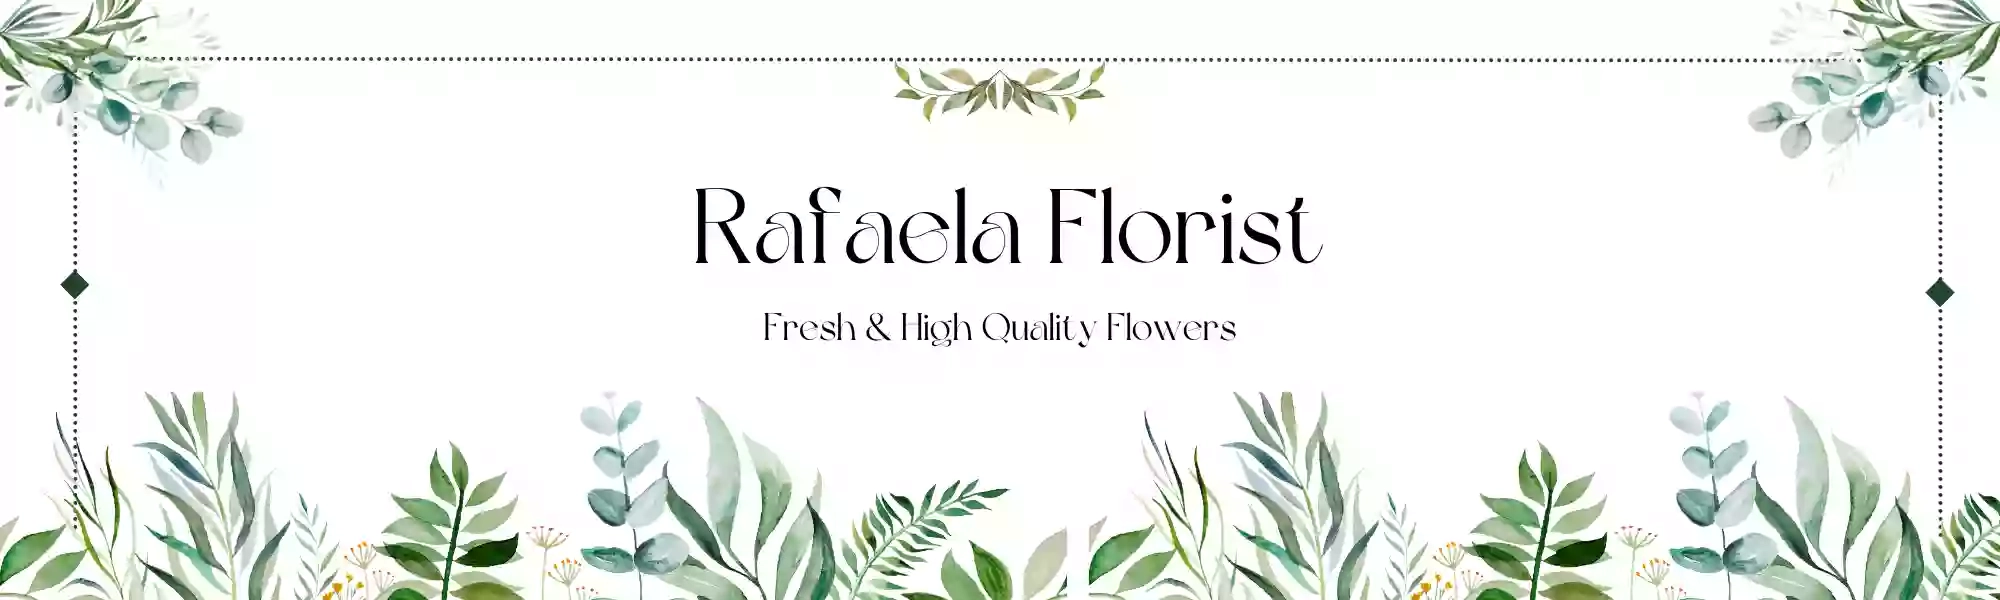 Rafaela Florist